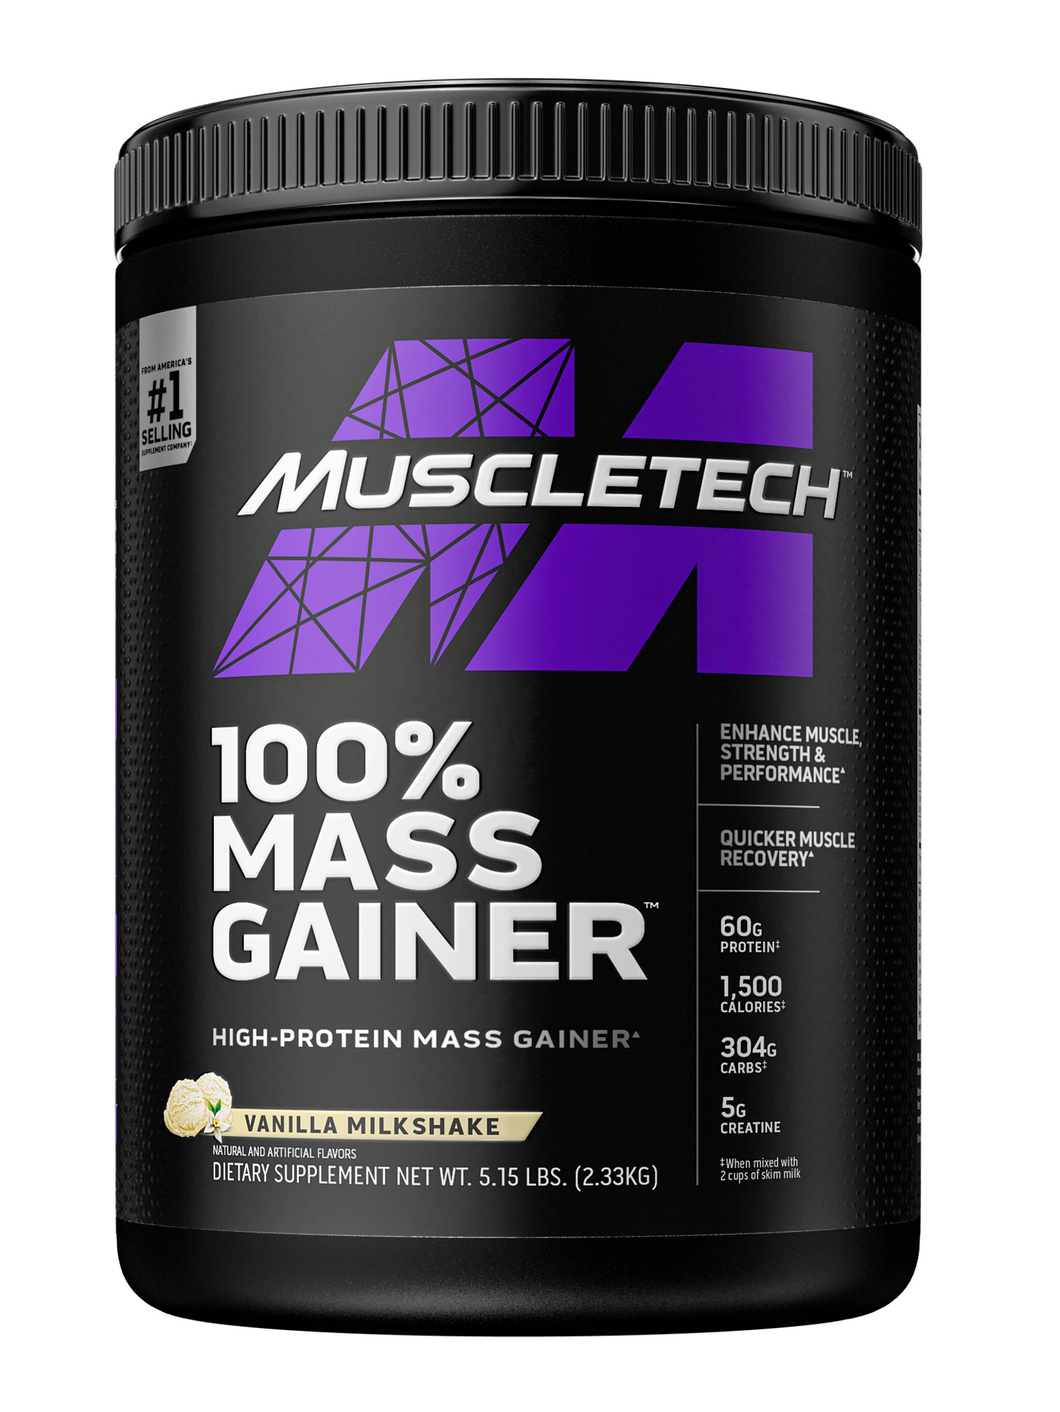 Proteína en polvo Muscletech Pro Series Mass Gainer , 60 g de proteína, Vainilla y Chocolate, 5 lb, 80 oz.0